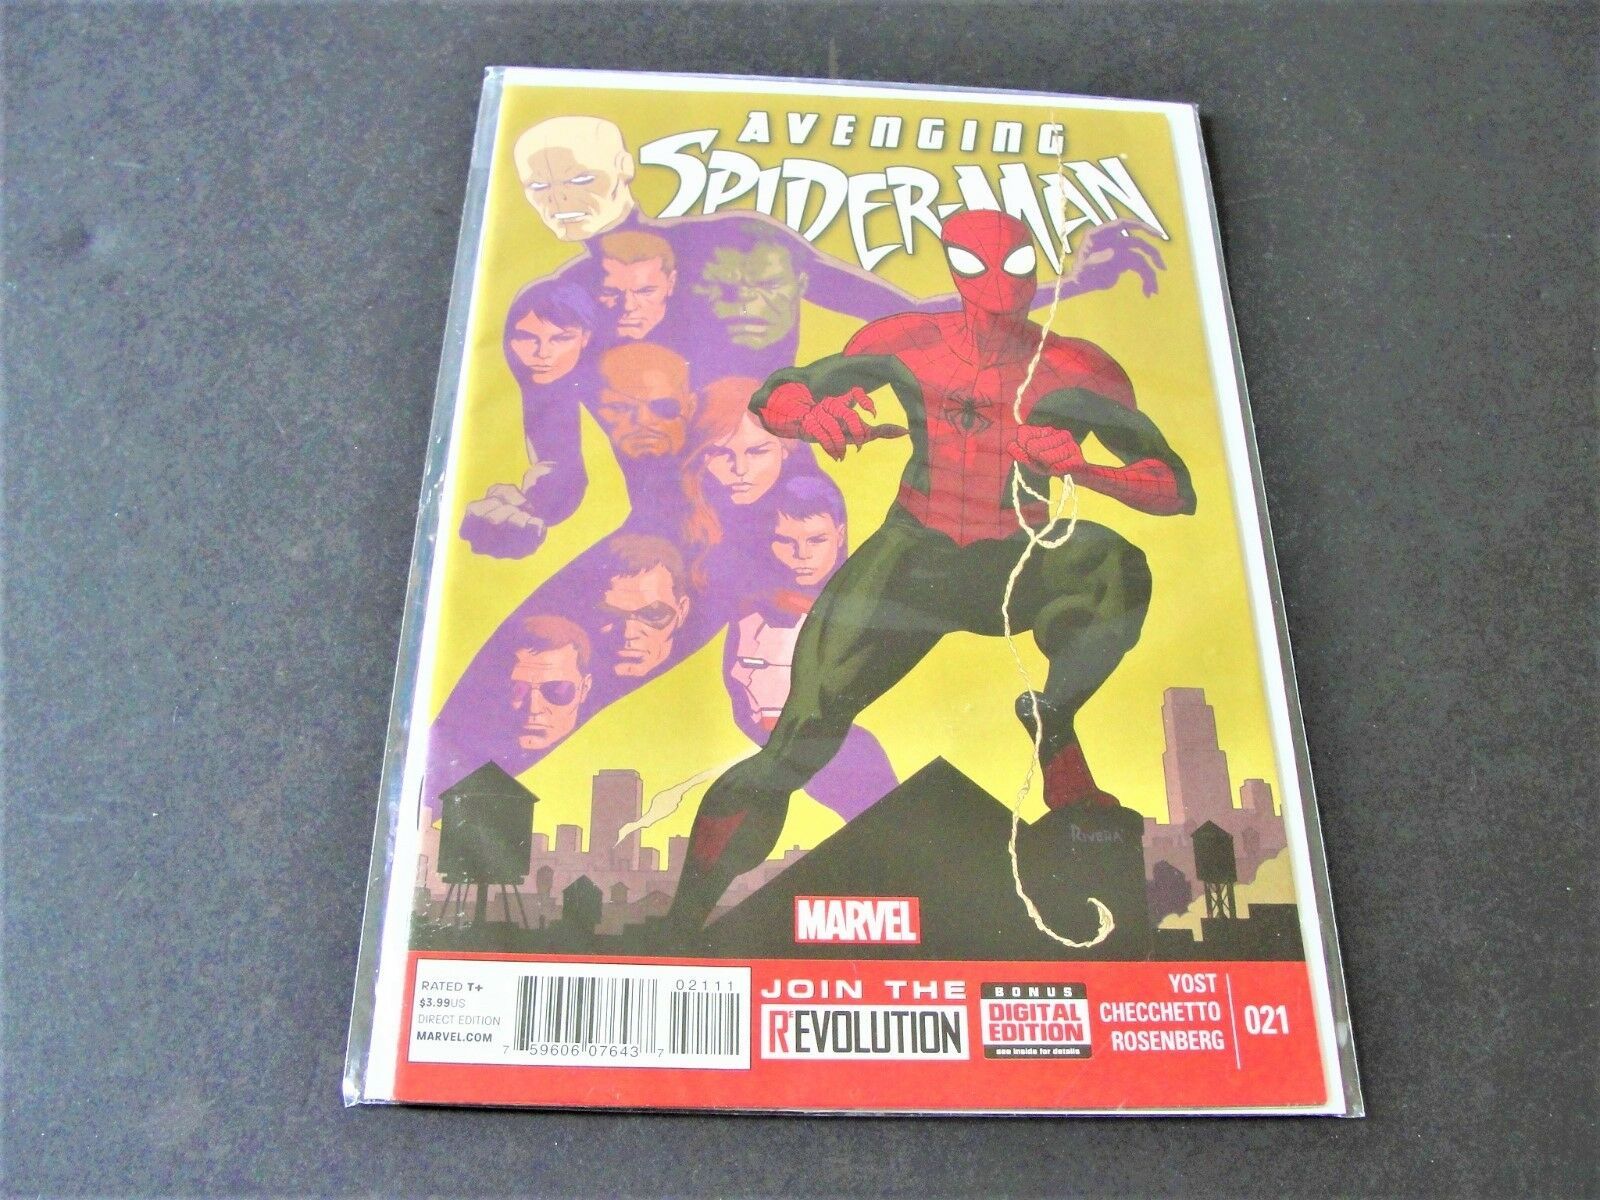 AVENGING SPIDER-MAN #21 -Modern Age, MARVEL COMICS-July 2013 Comic Book. - $9.27